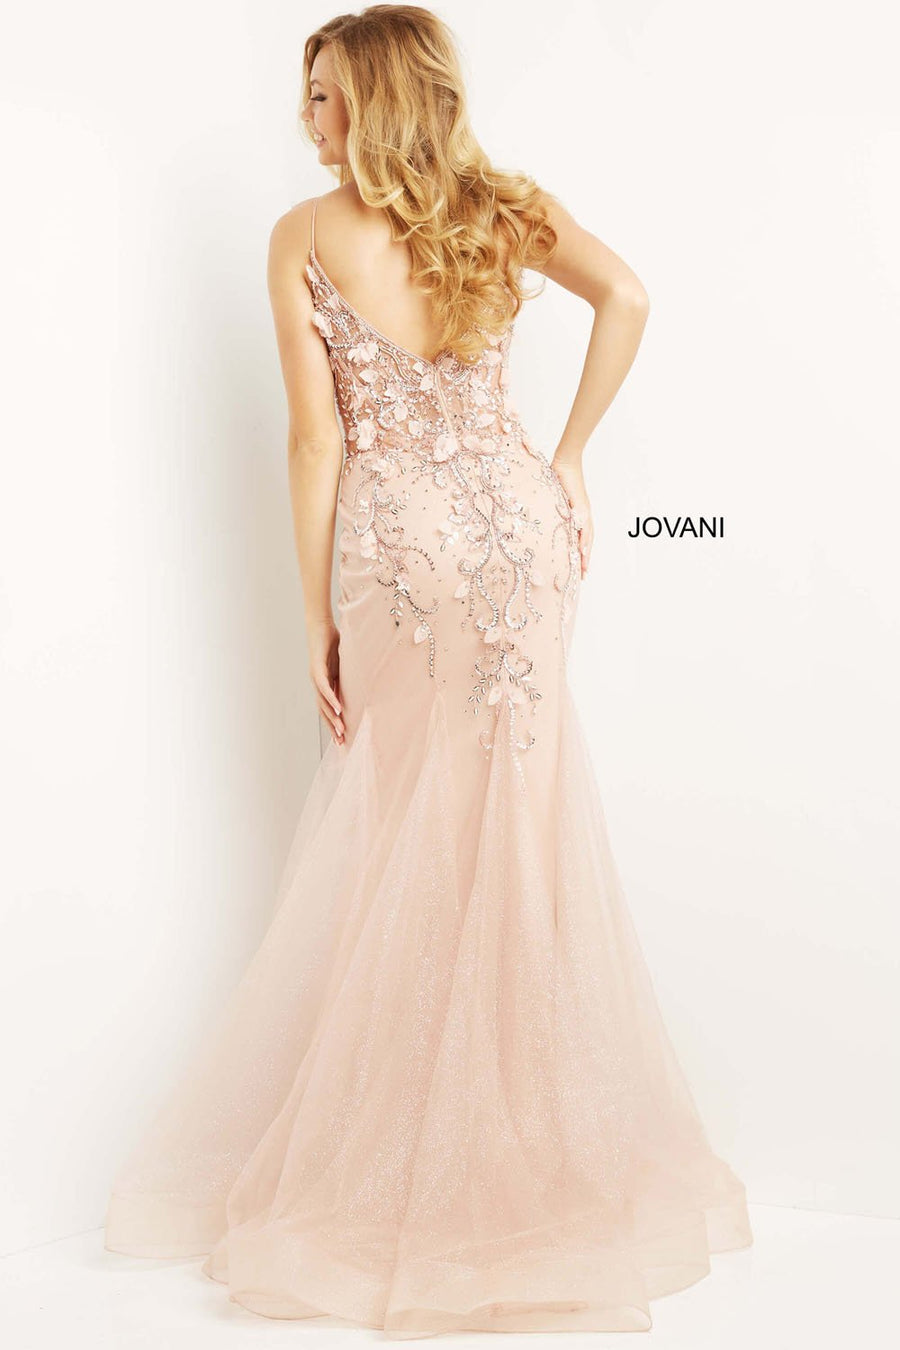 Jovani 05839  prom dresses images.